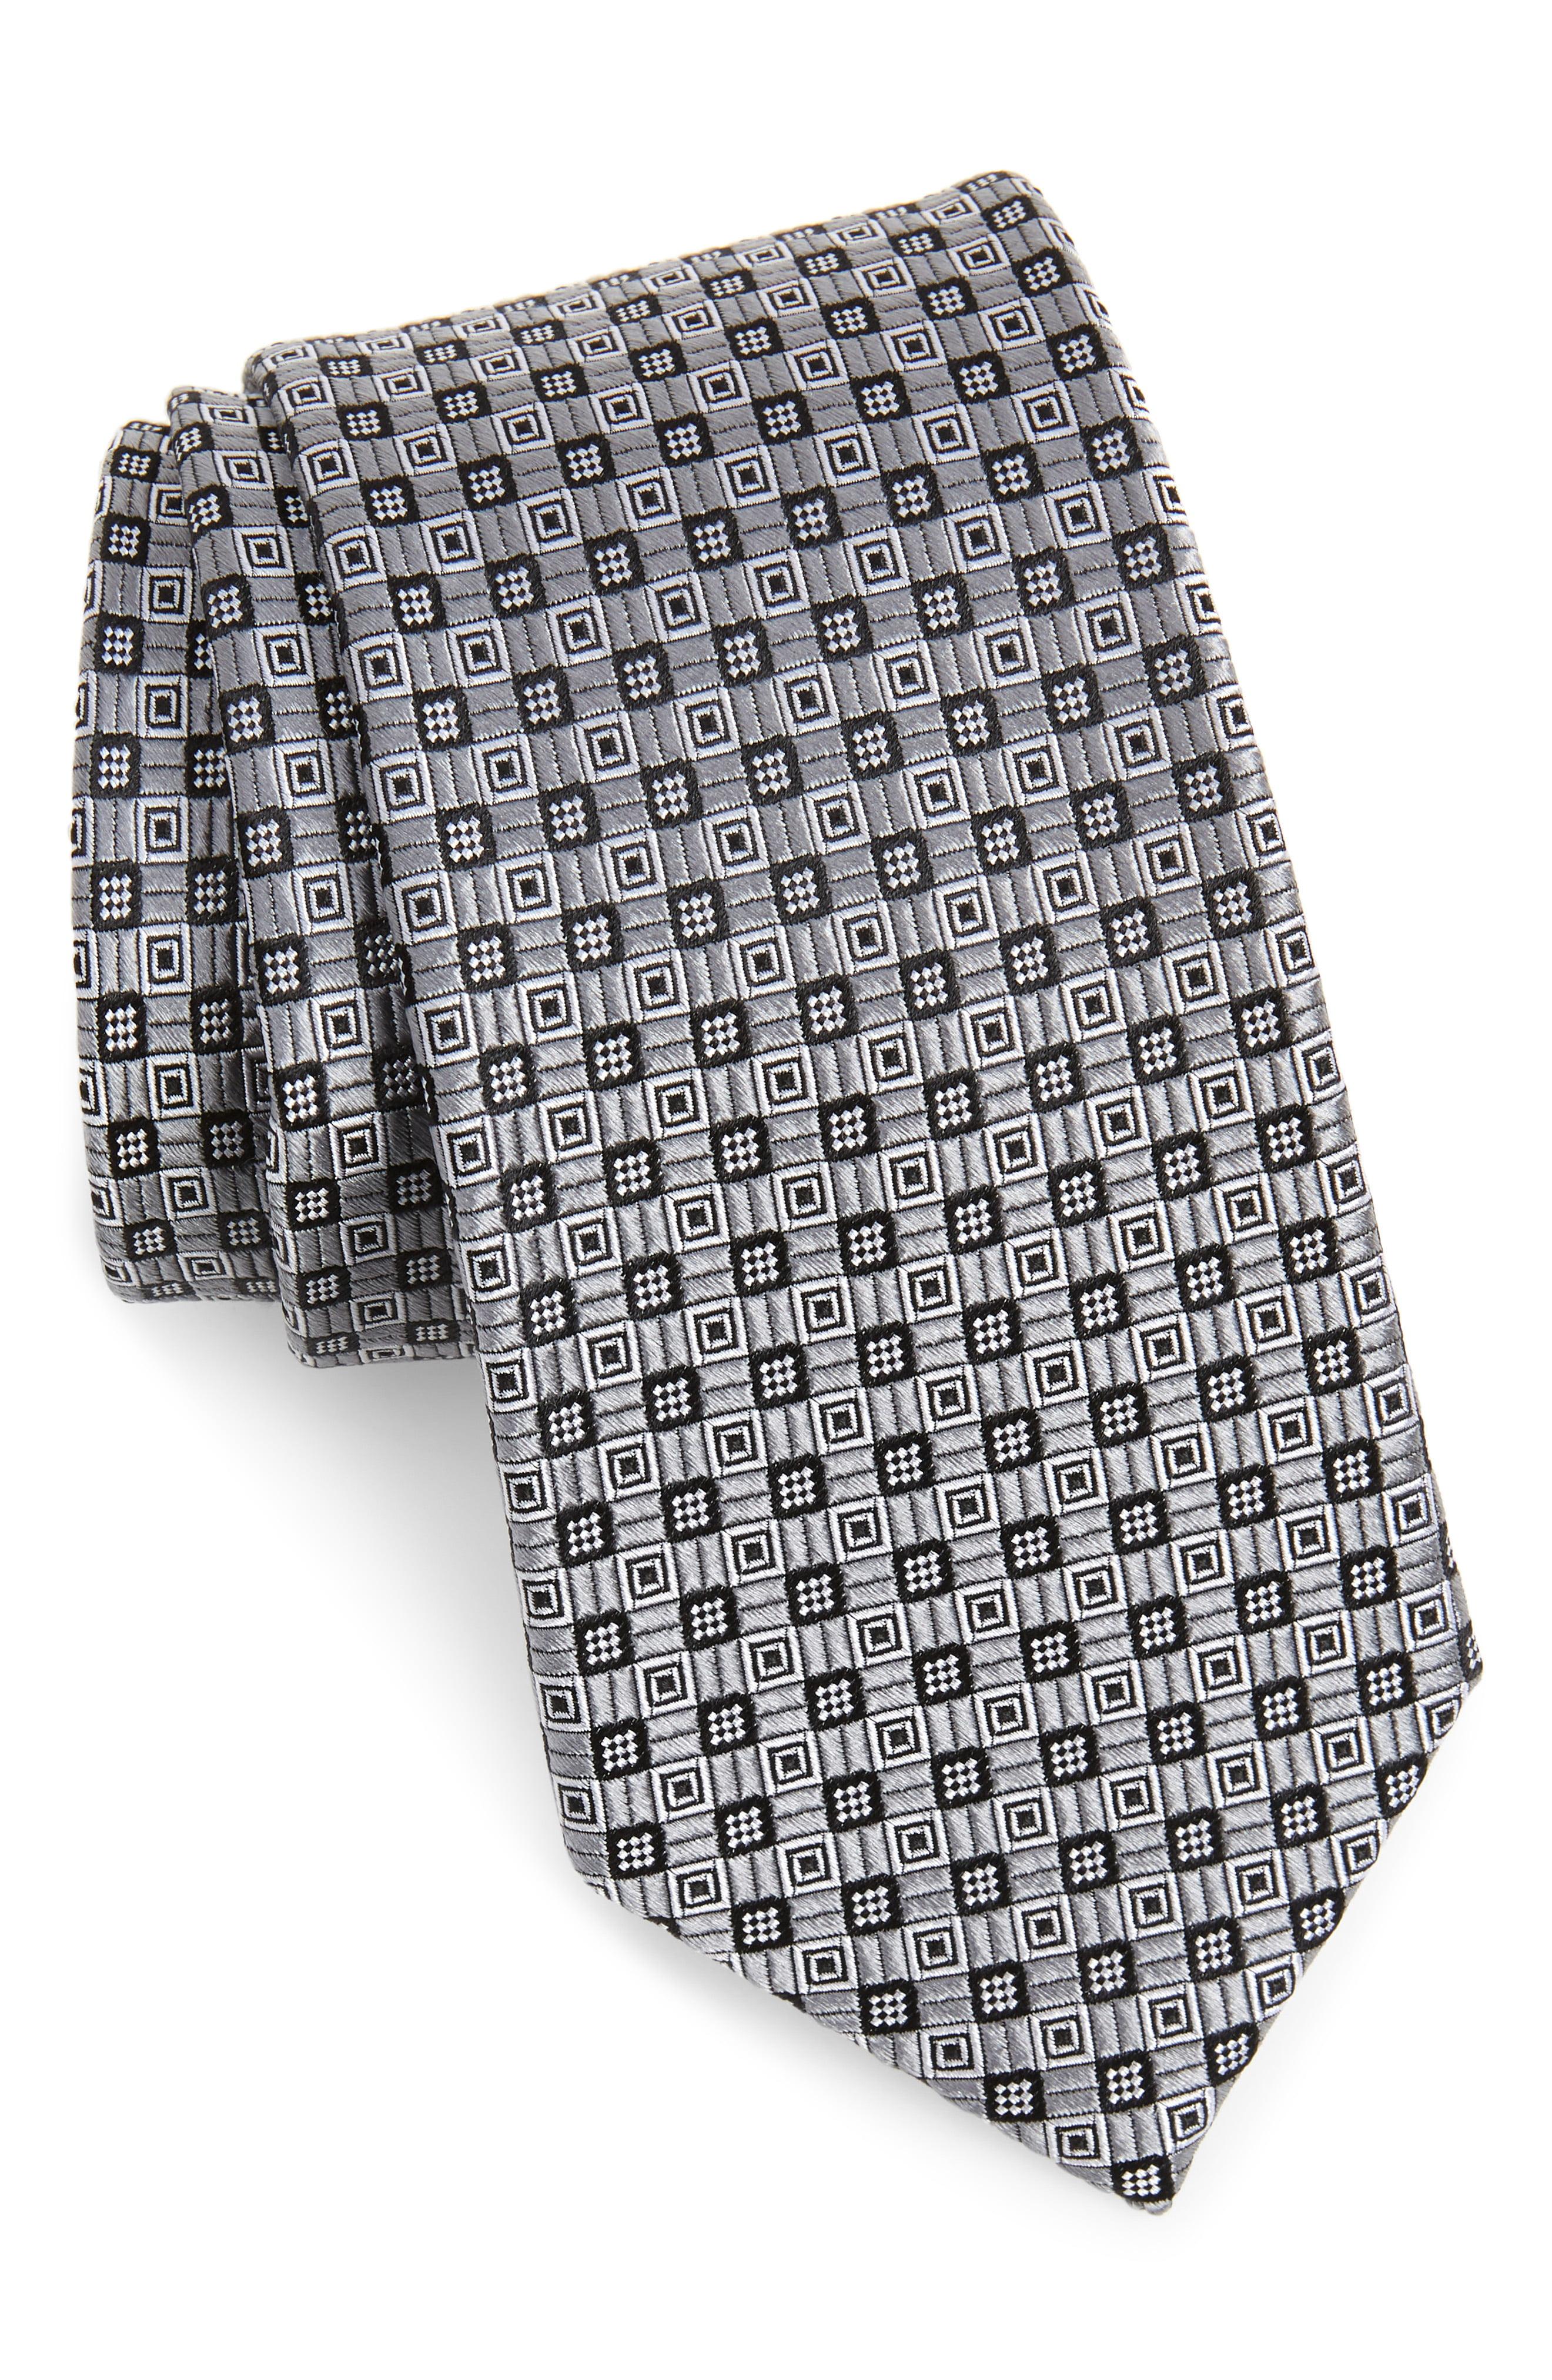 Ted Baker Parquet Grid Silk Tie in Gray for Men - Lyst